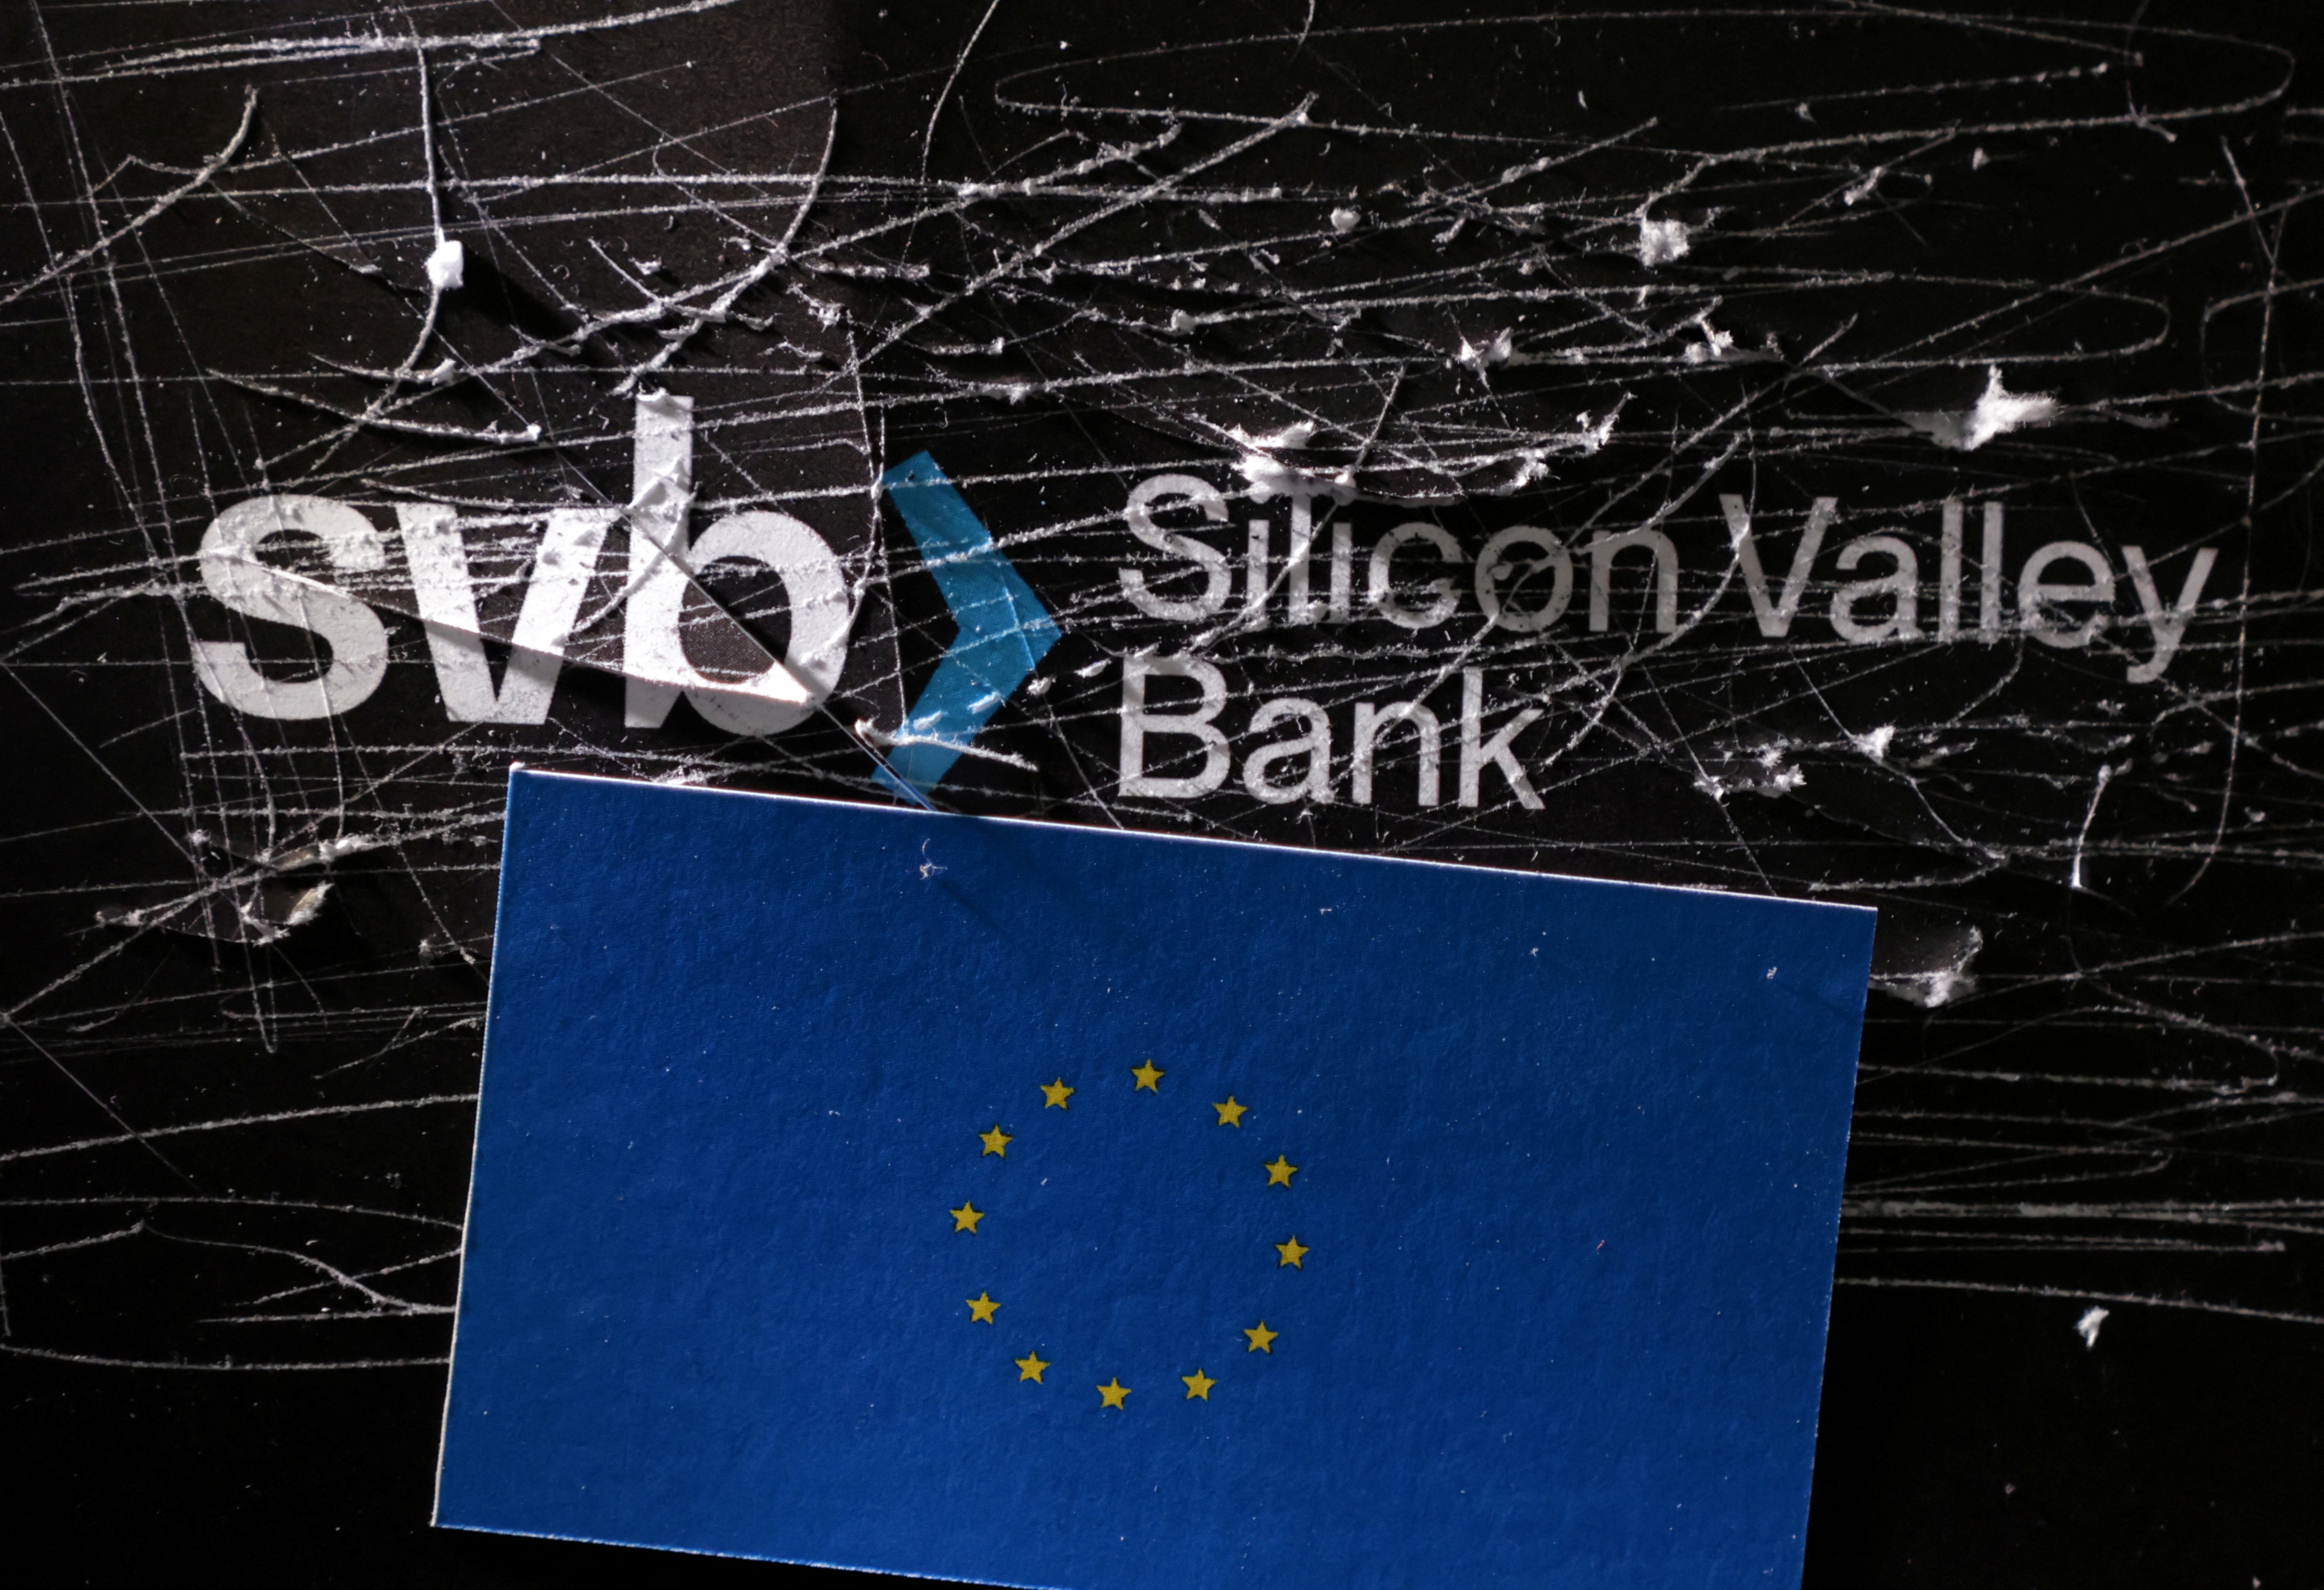 Illustration shows destroyed SVB (Silicon Valley Bank) logo and EU flag